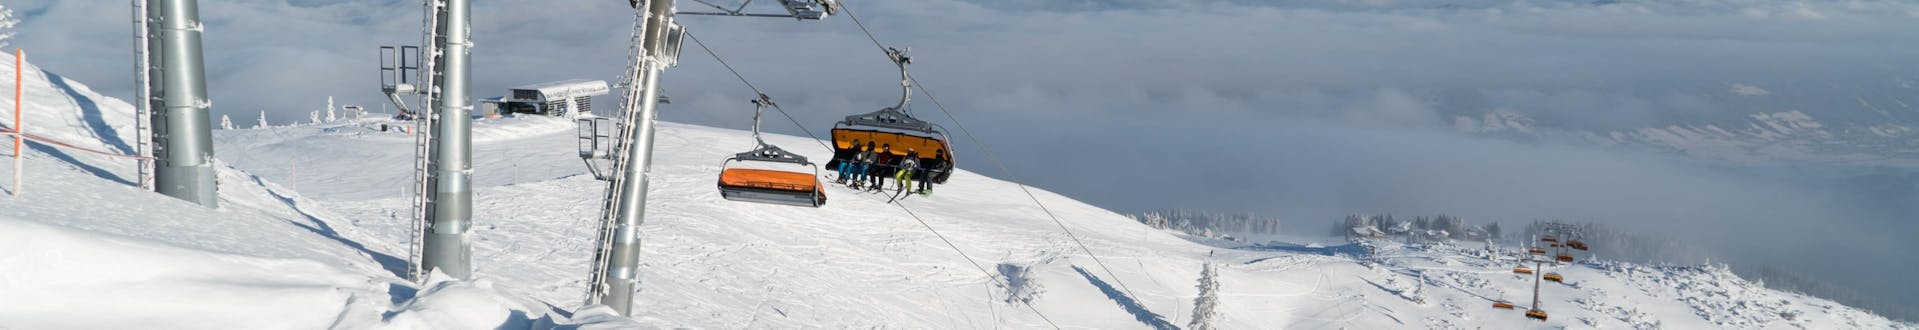 A ski lift in the ski resort of Wagrain in Austria, where you can book ski lessons.